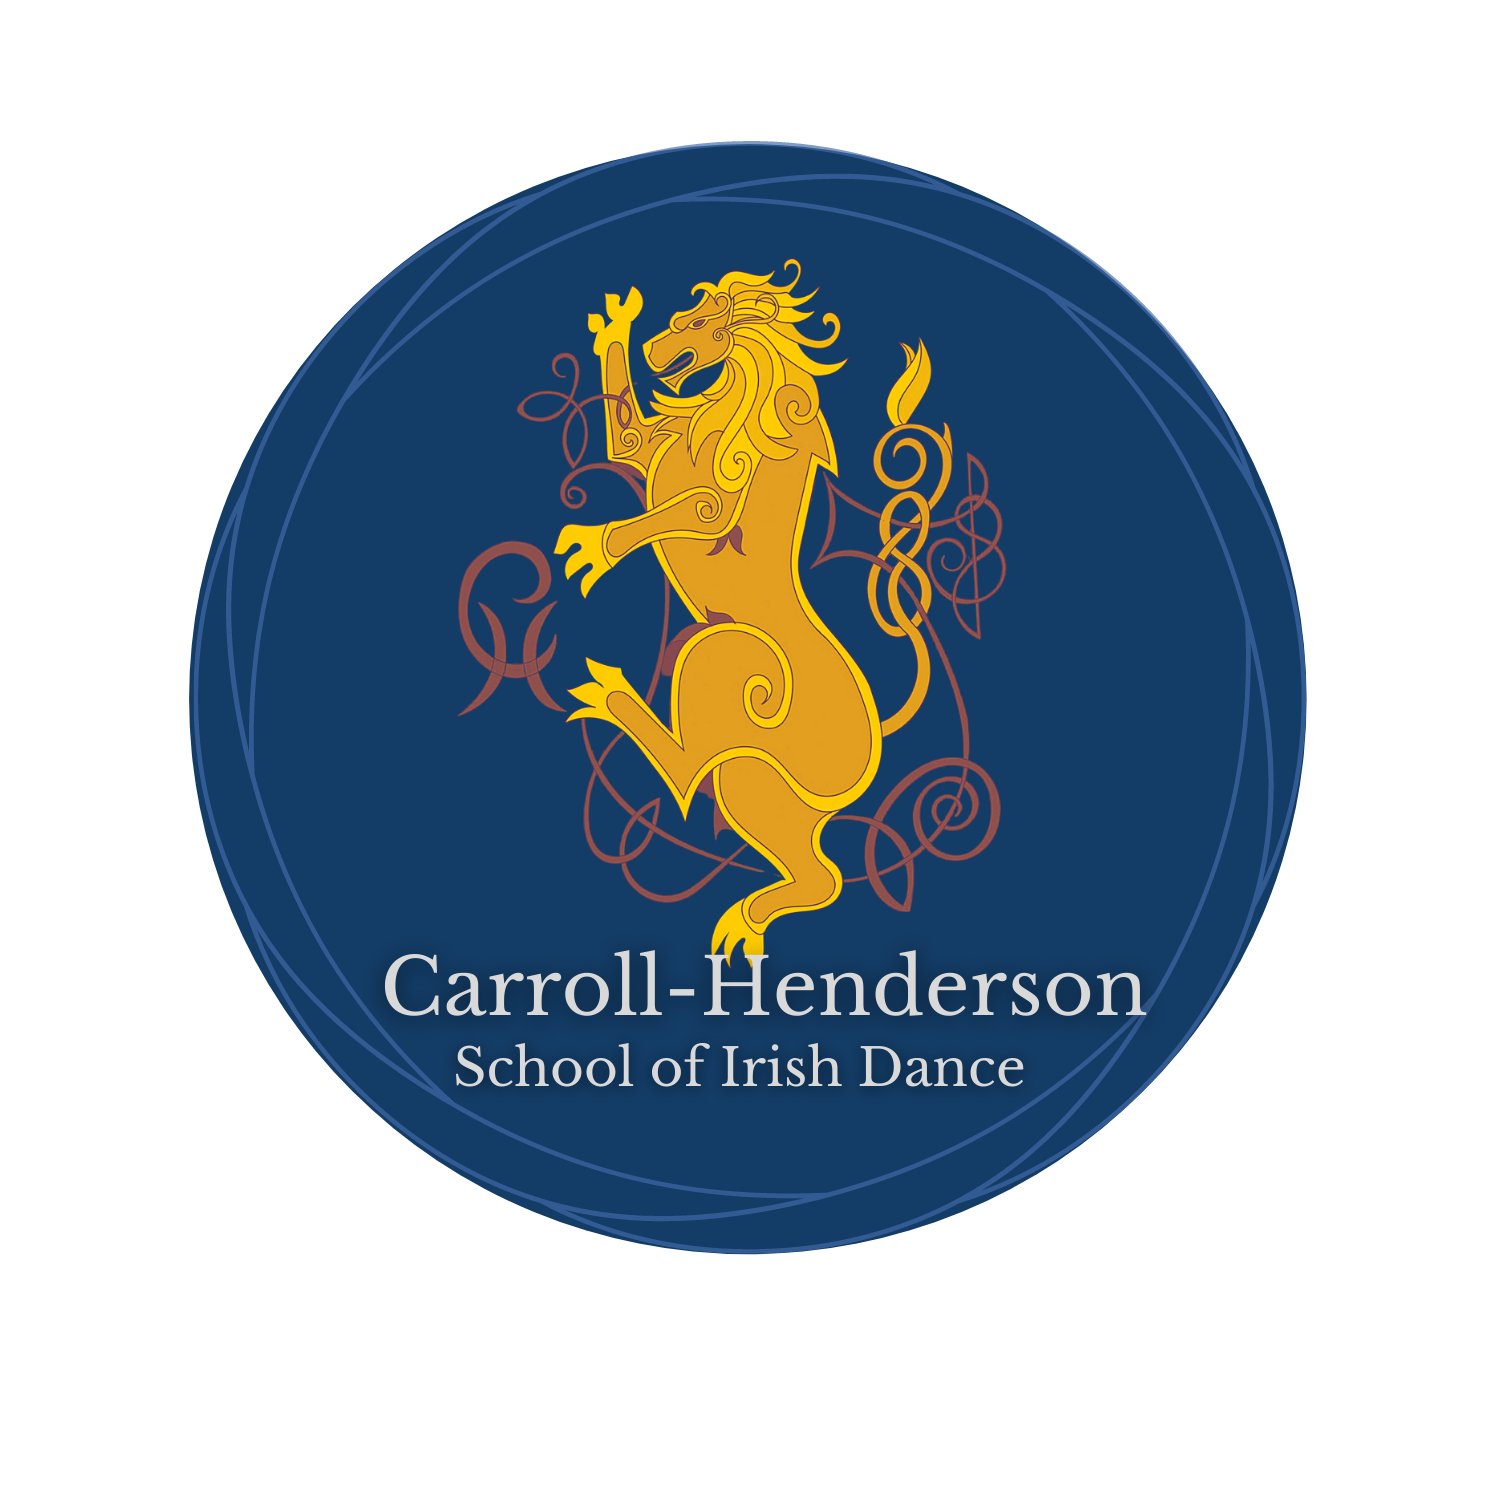 Carroll-Henderson School of Irish Dance